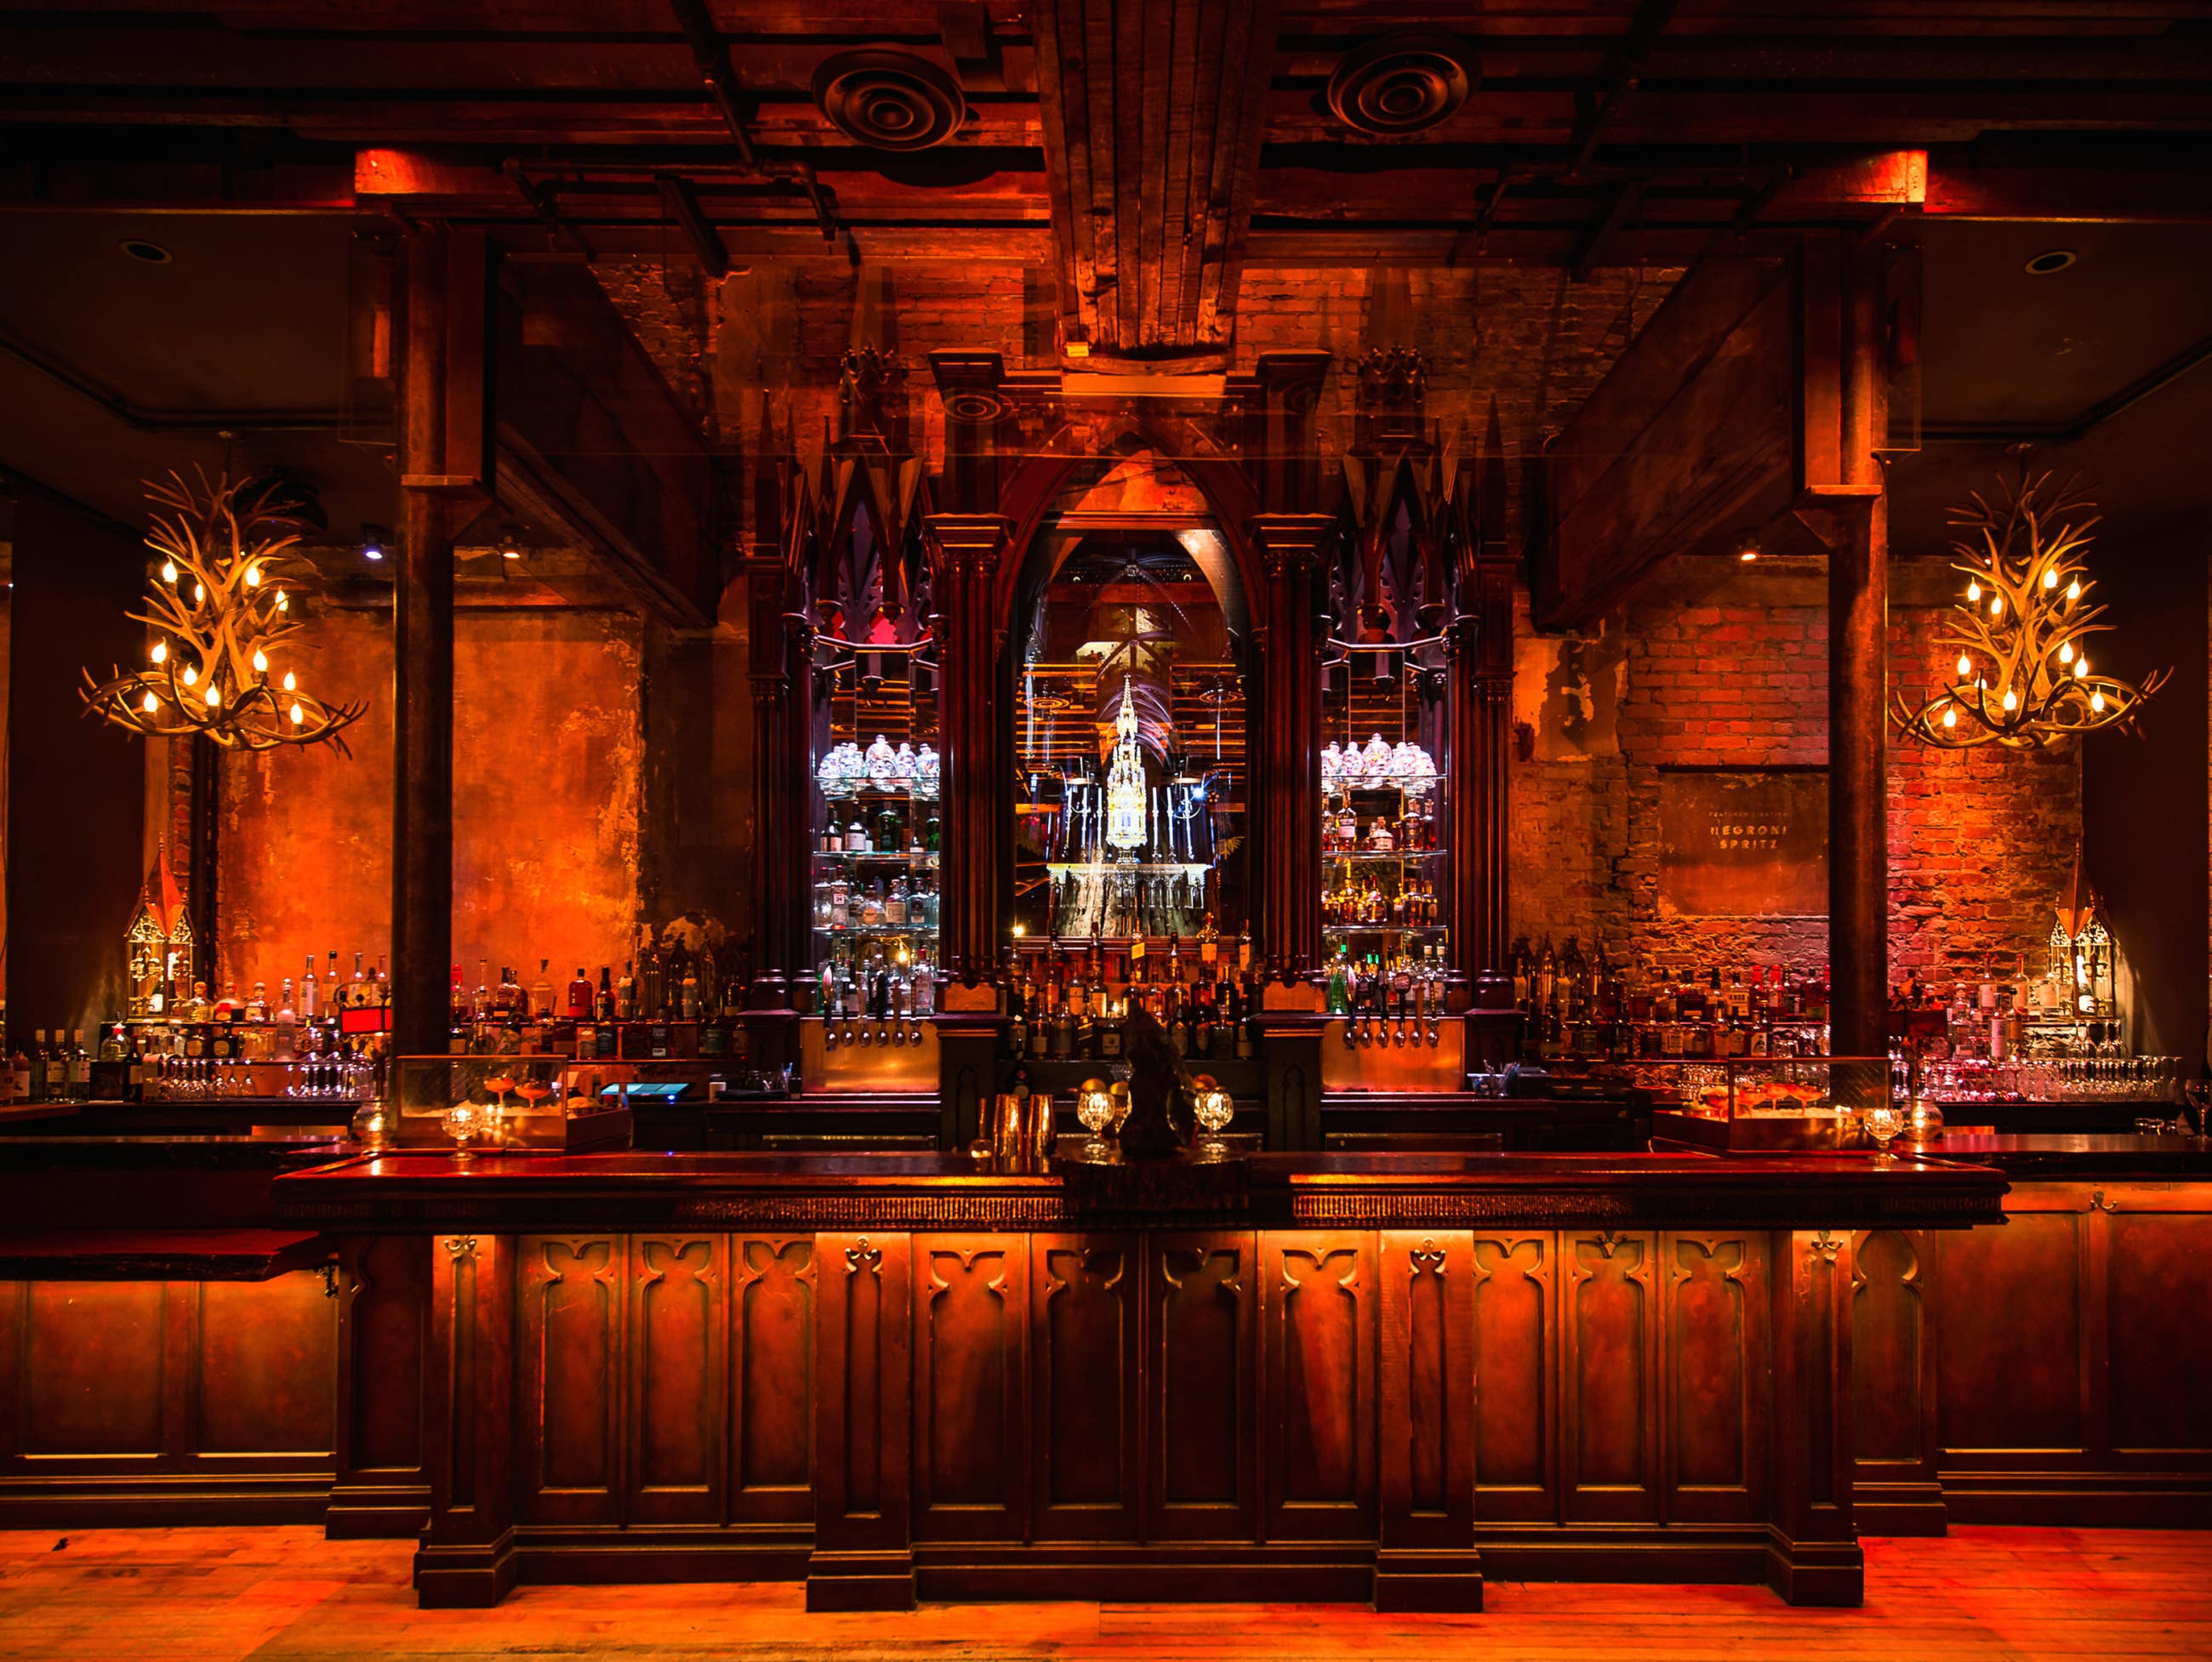 Drink Spirits with Spirits at Haunted Los Angeles Bars | Discover Los